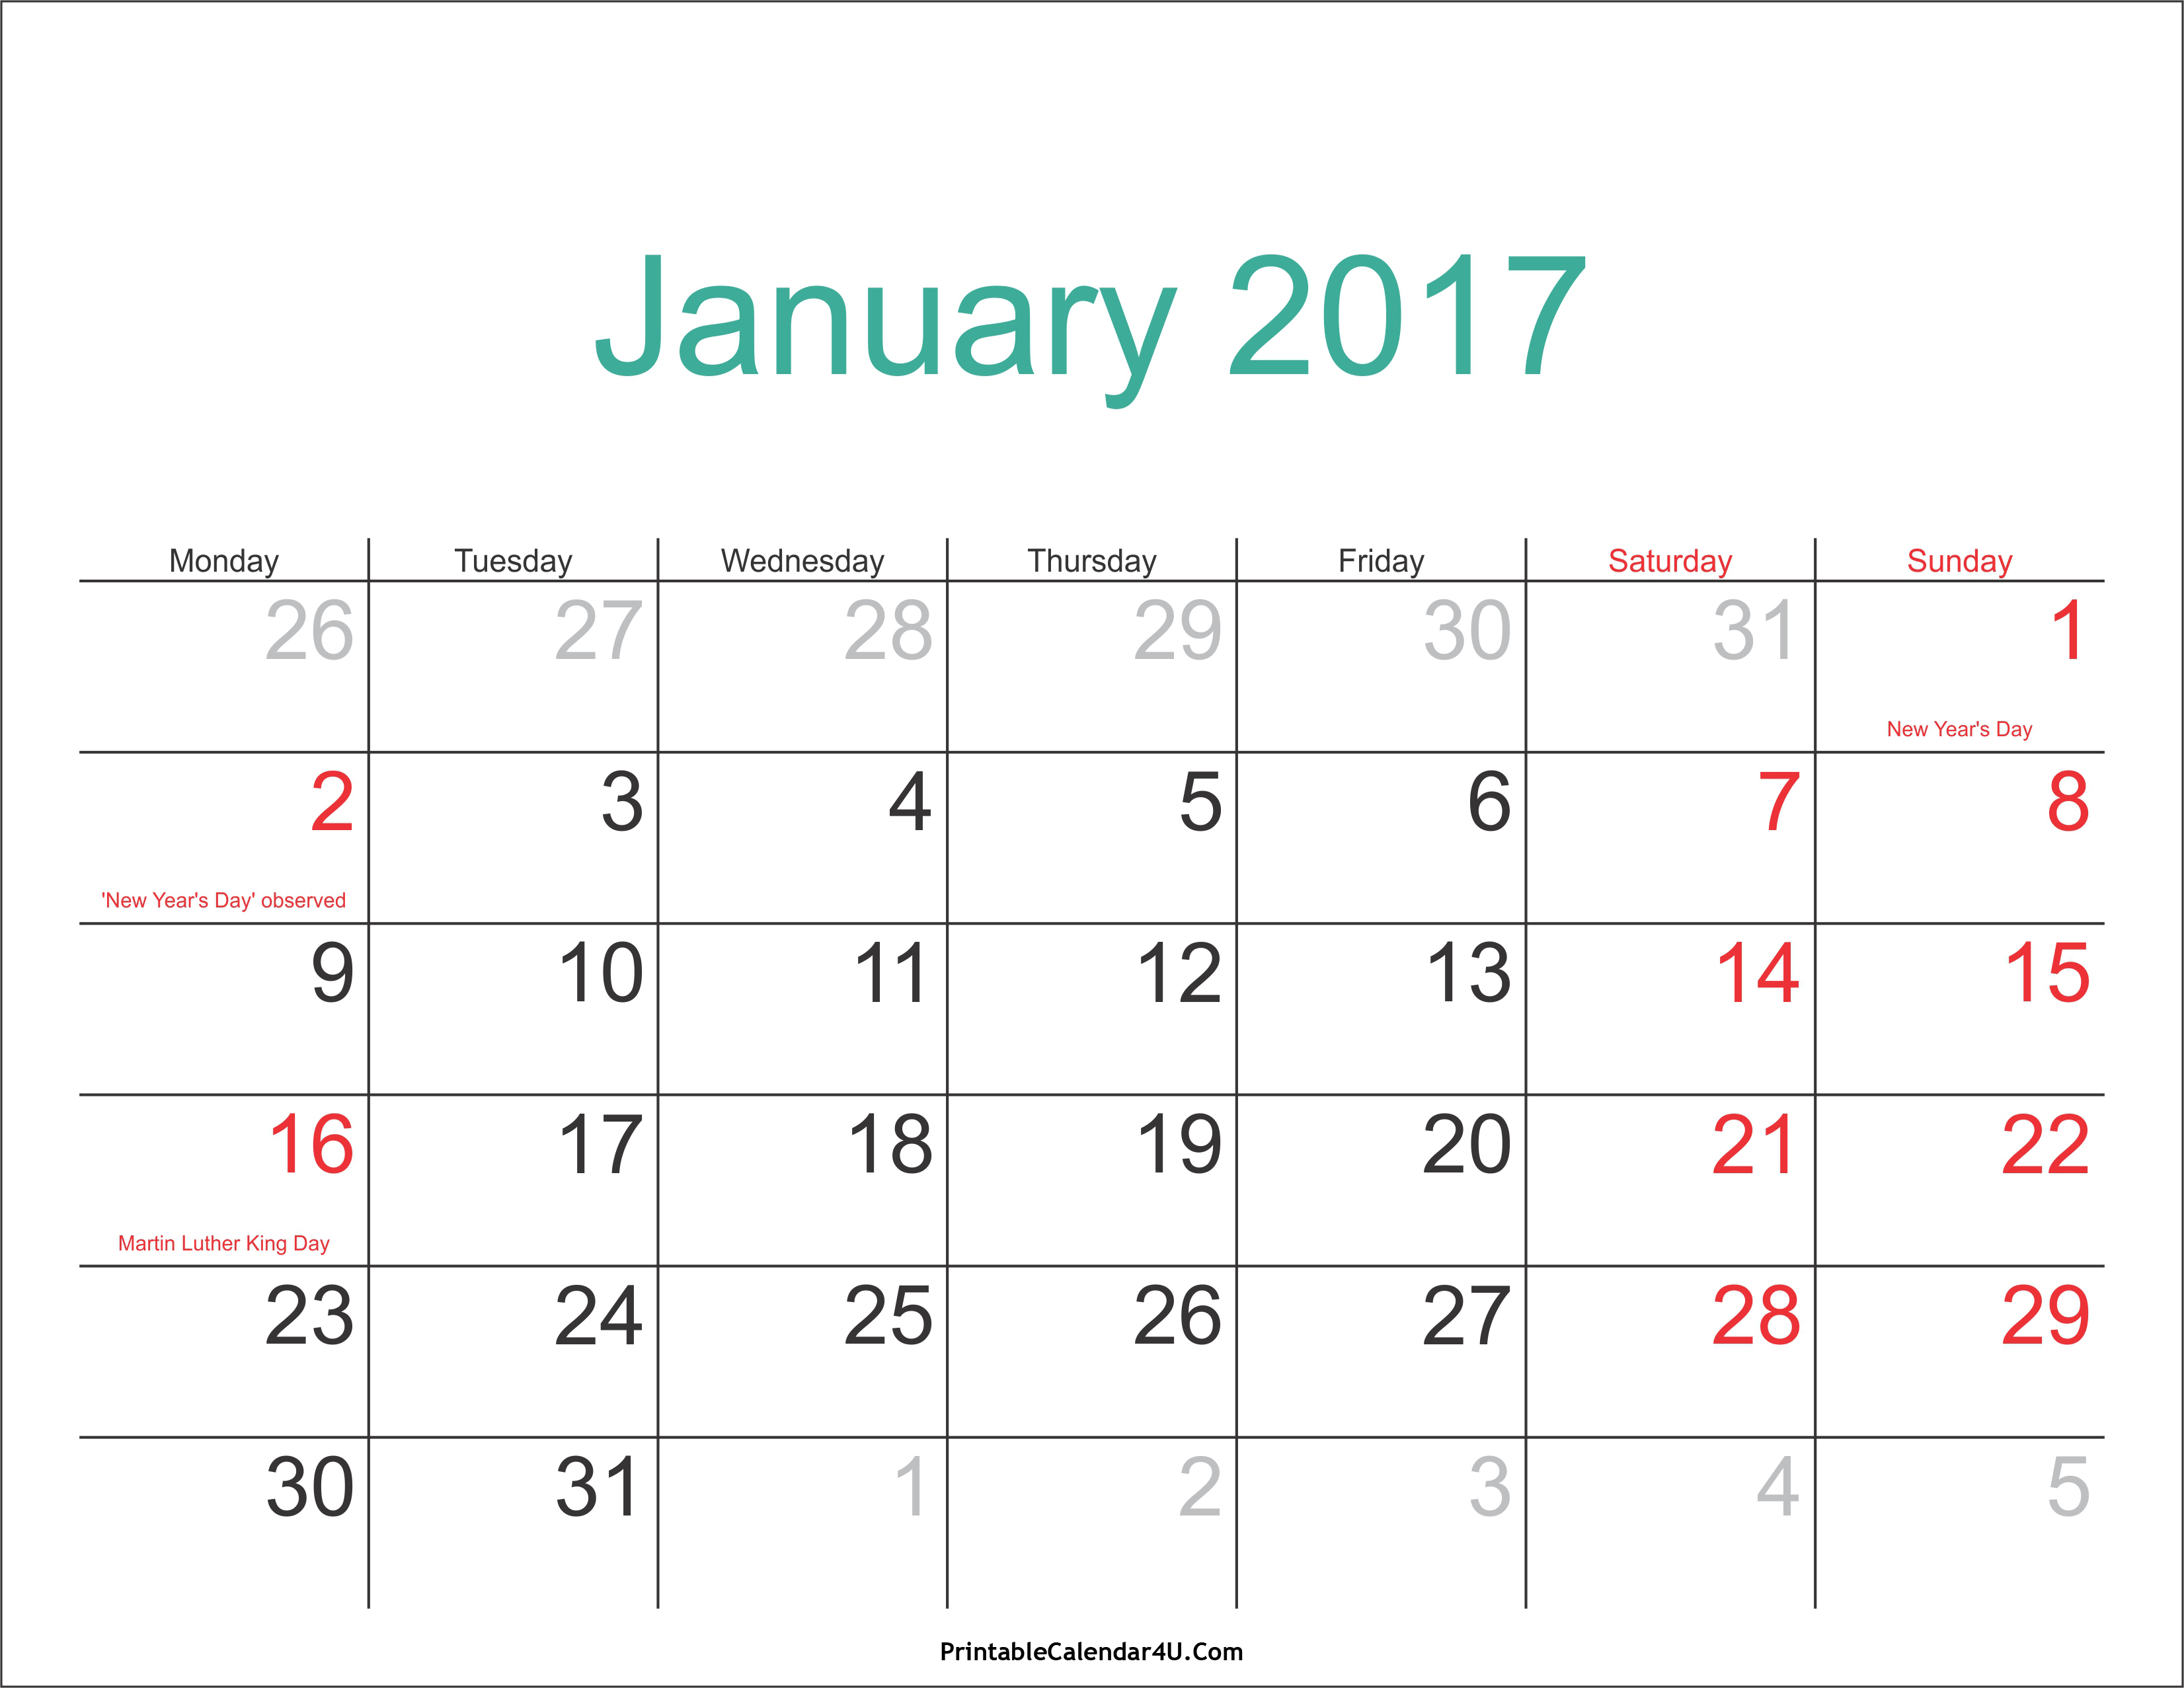 January calendar 2017 in pdf